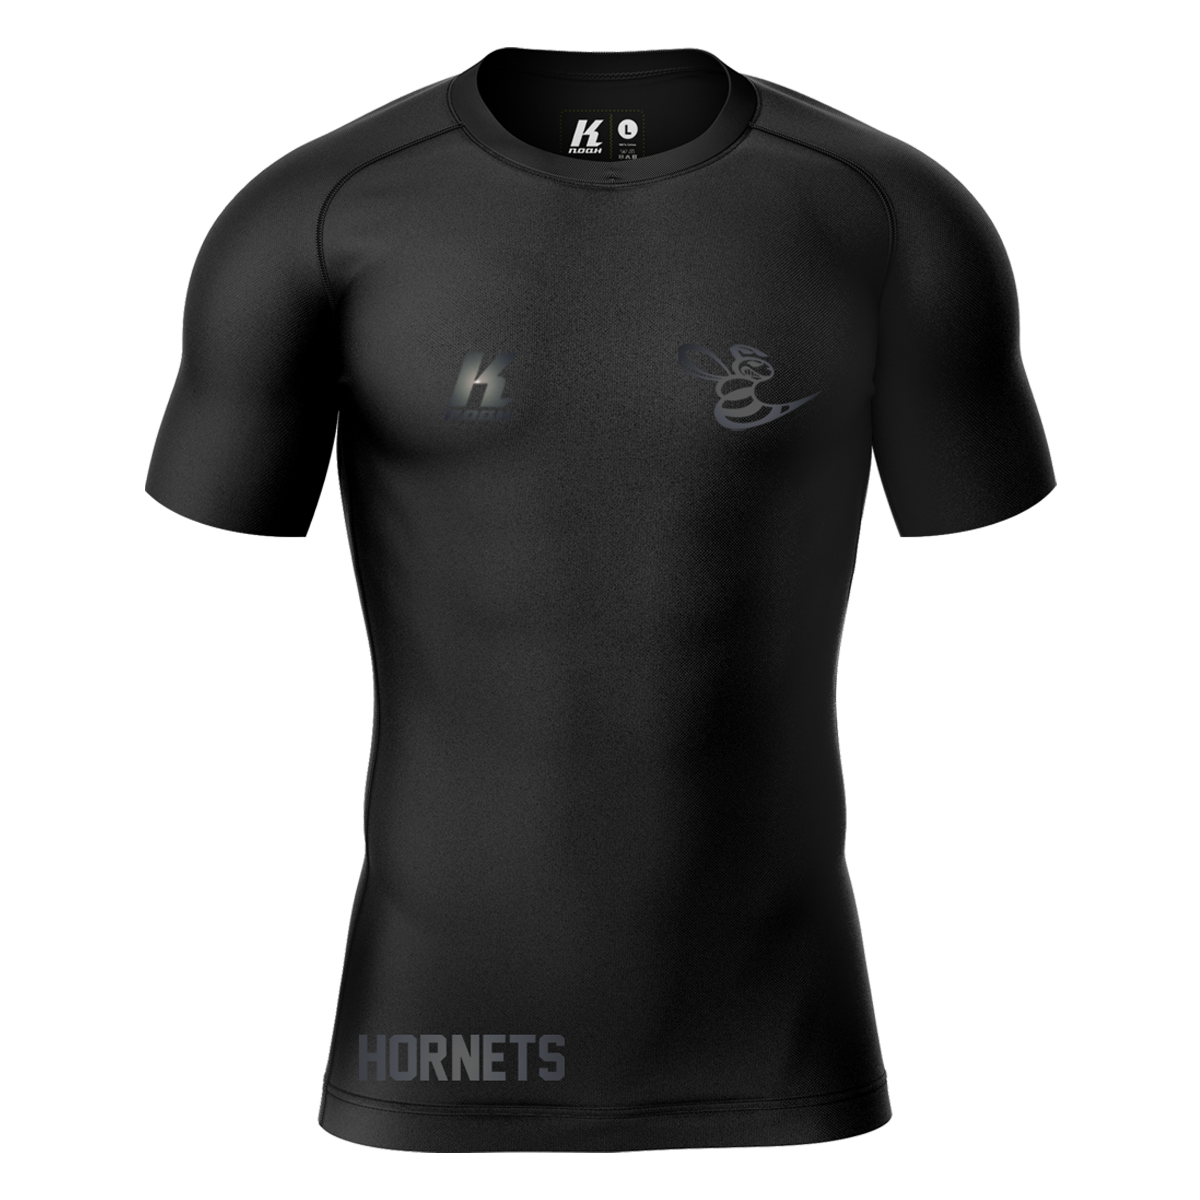 Hornets "Blackline" K.Tech Compression Shortsleeve Shirt